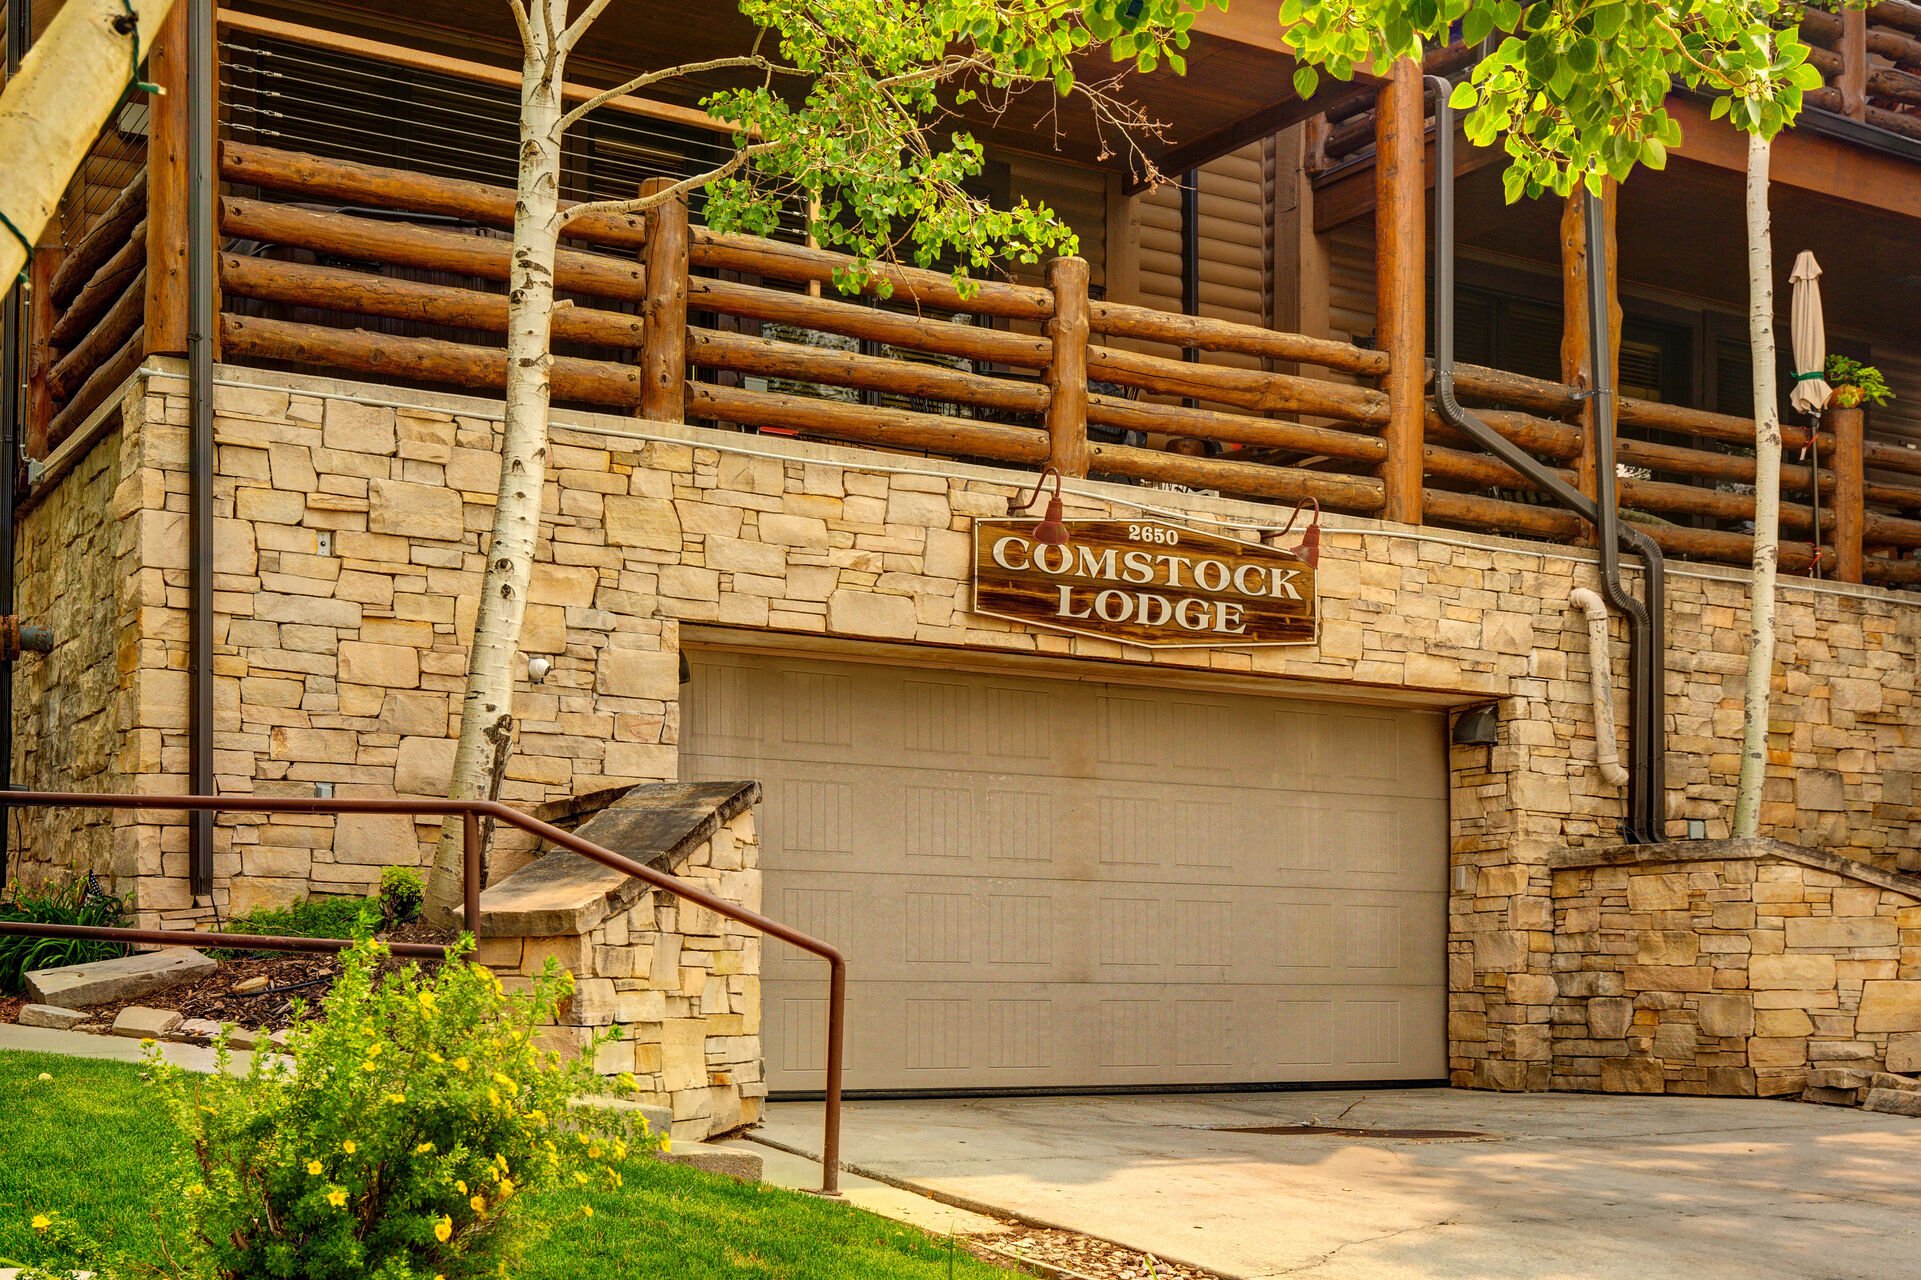 Comstock Lodge Garage Entrance